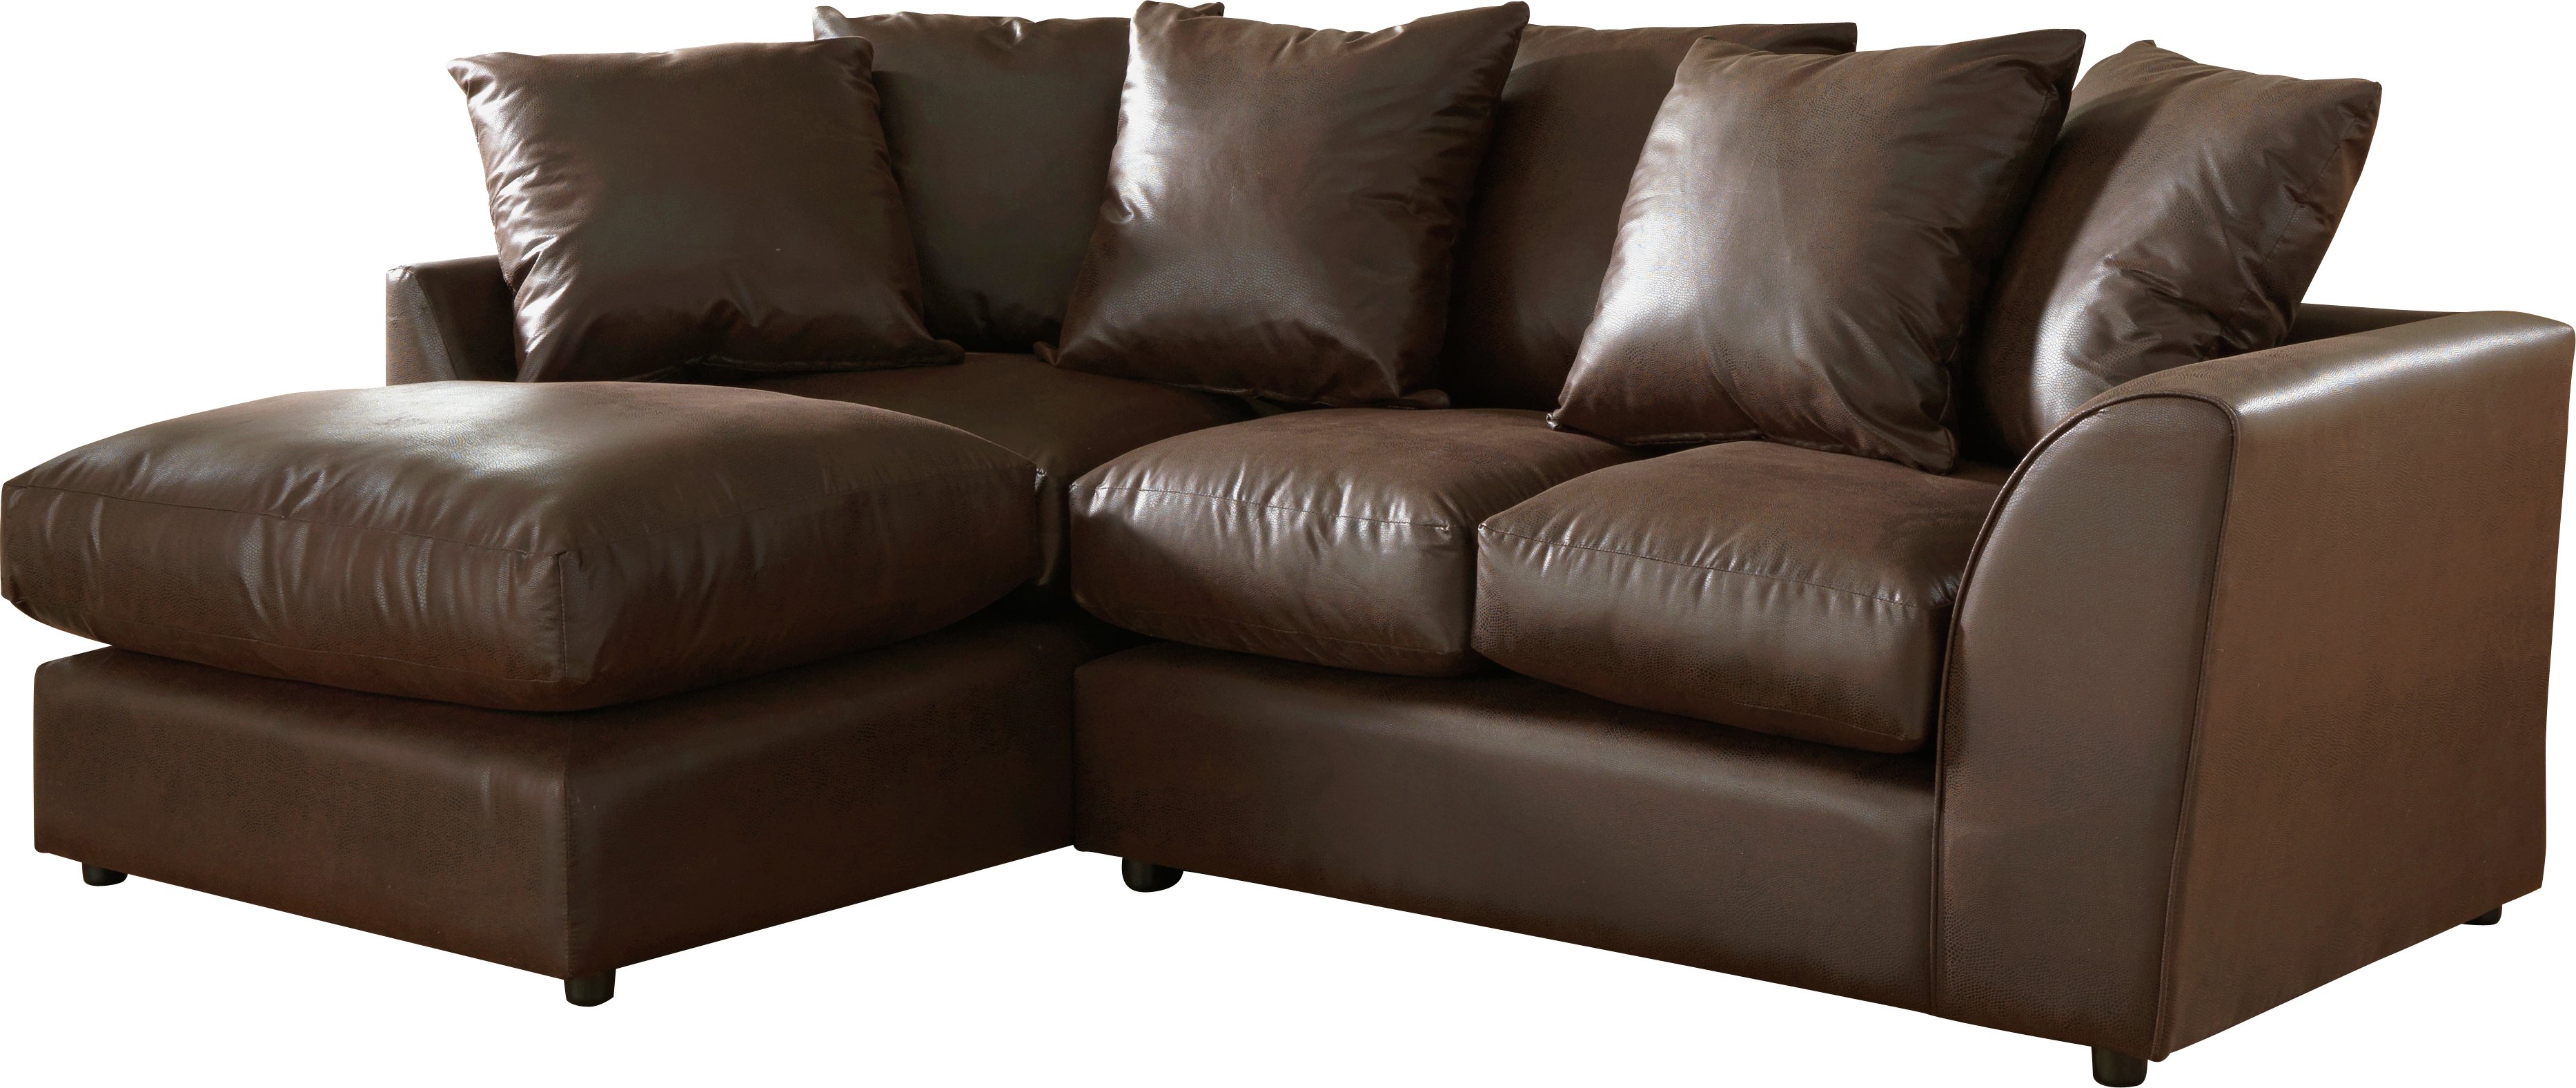 argos faux leather corner sofa